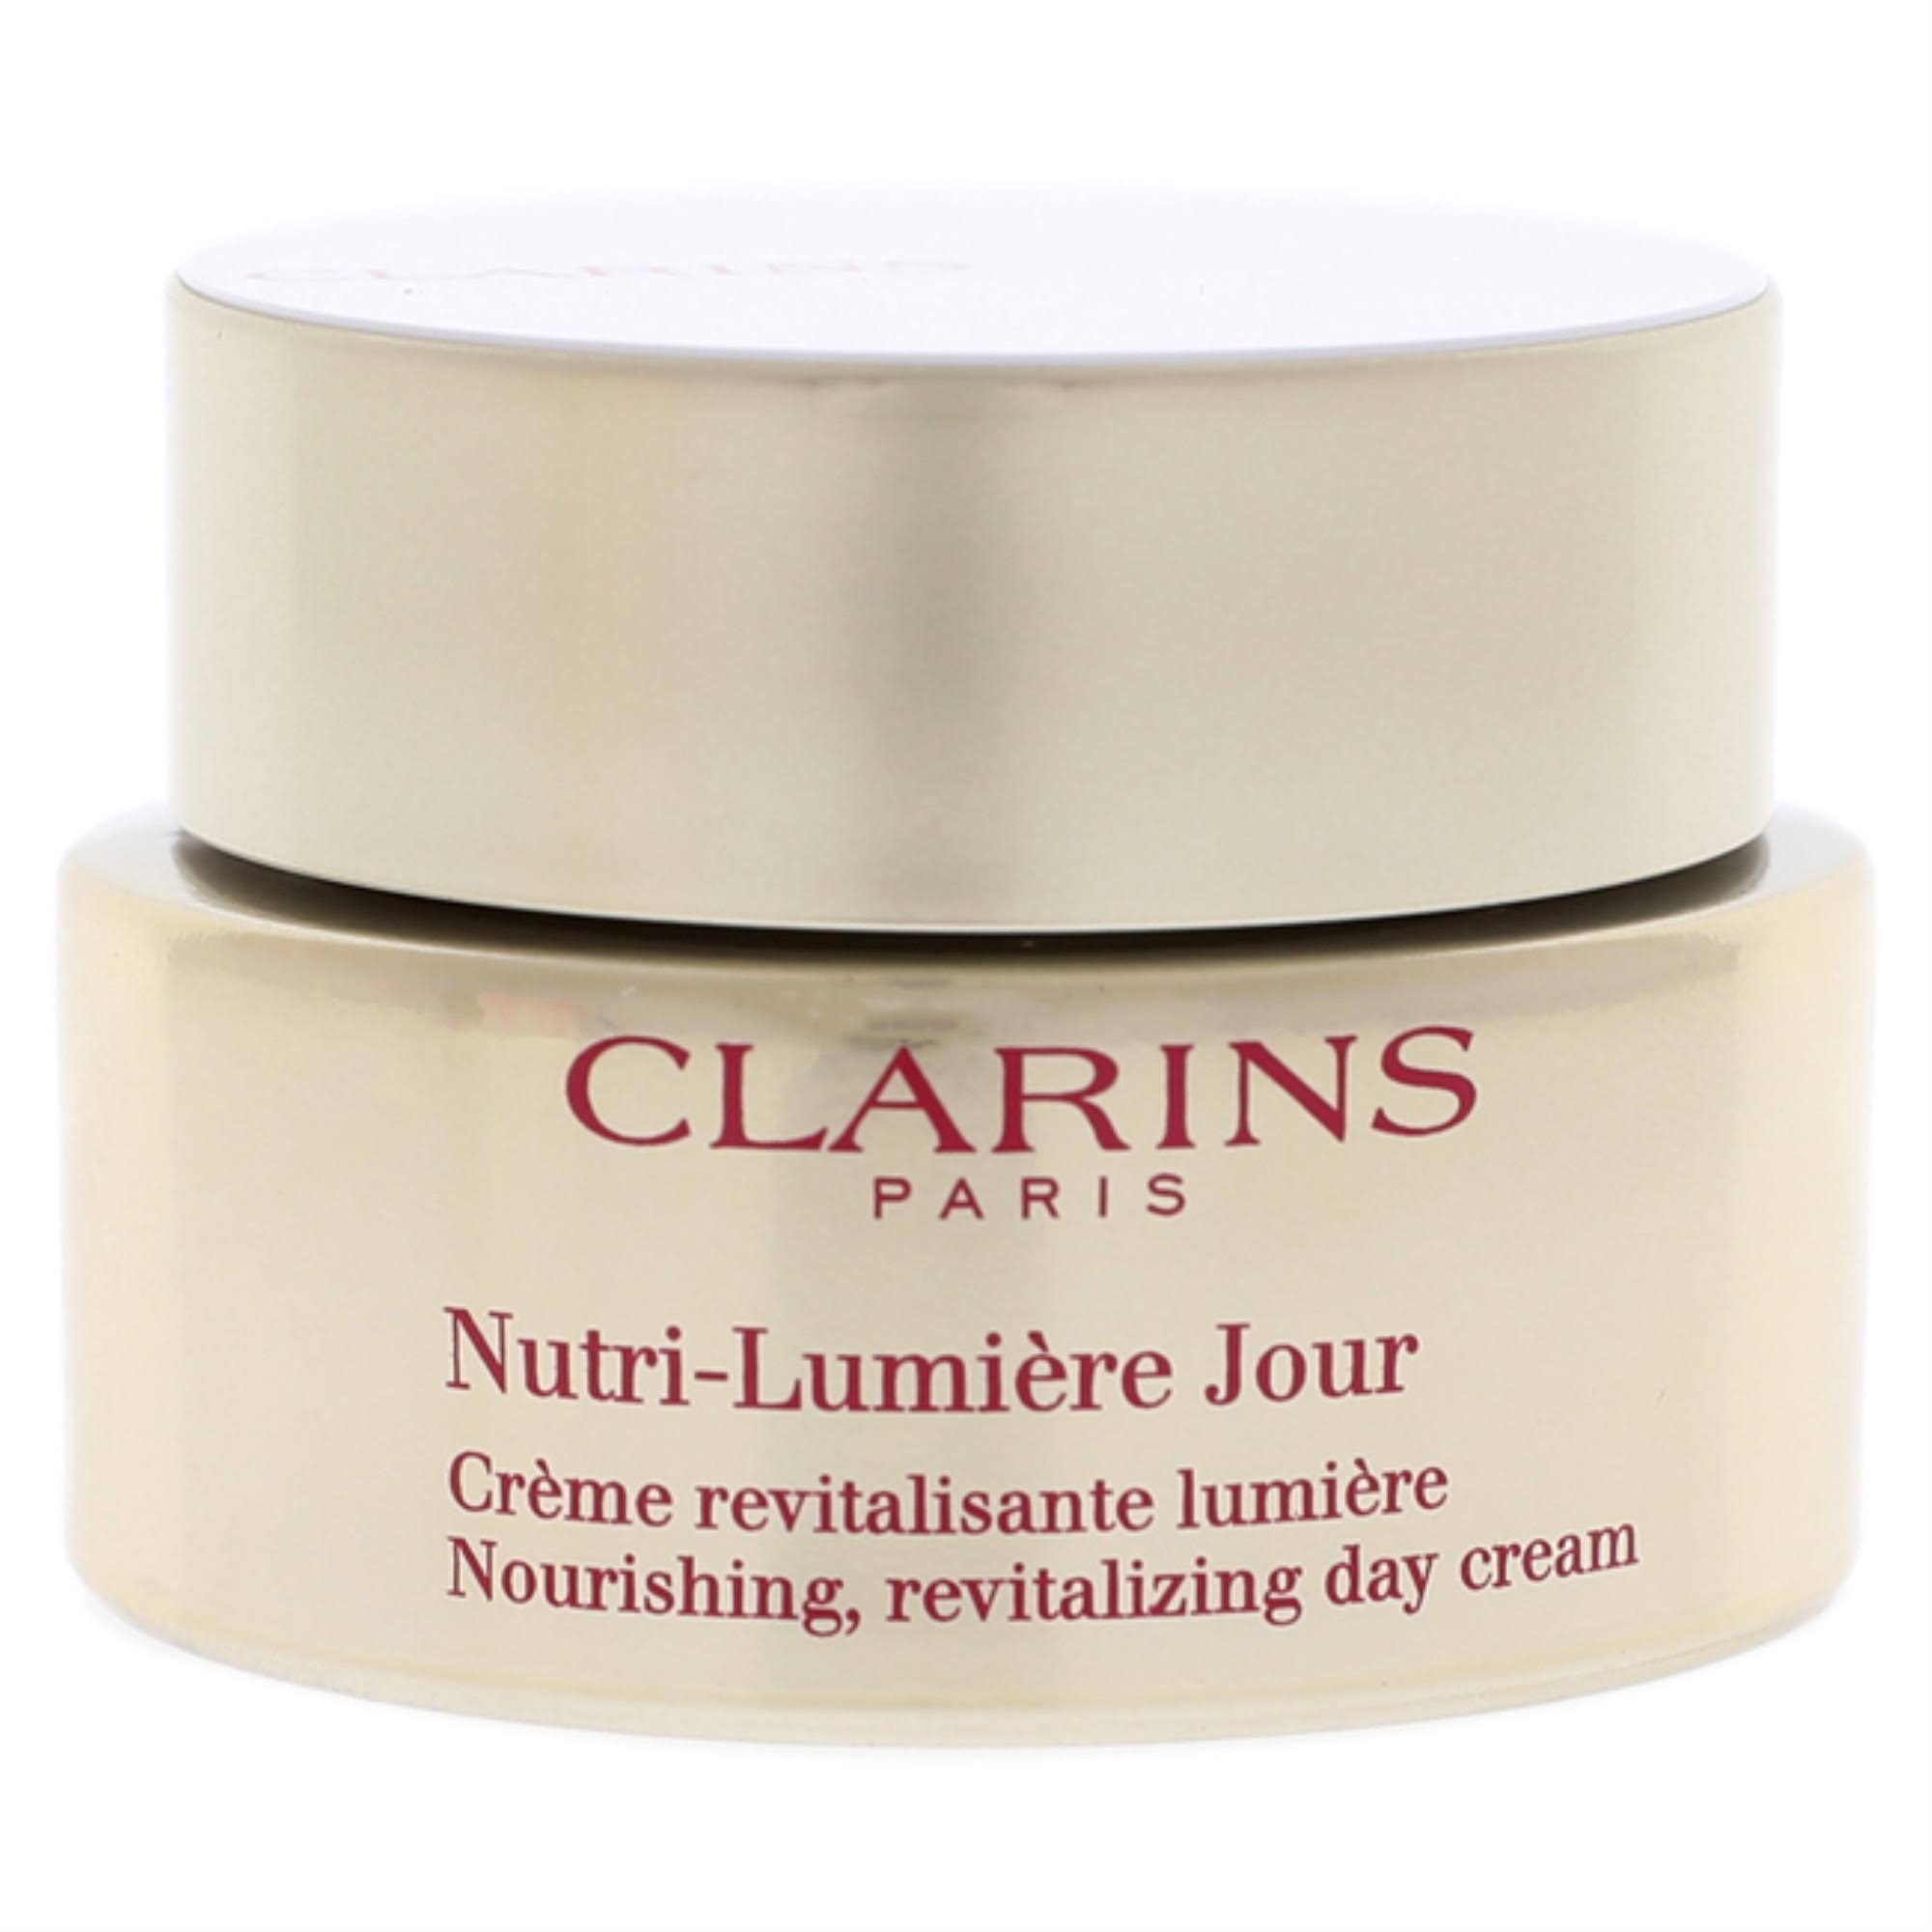 Clarins Nutri-Lumiere Jour 50ml Revitalizing Day Cream